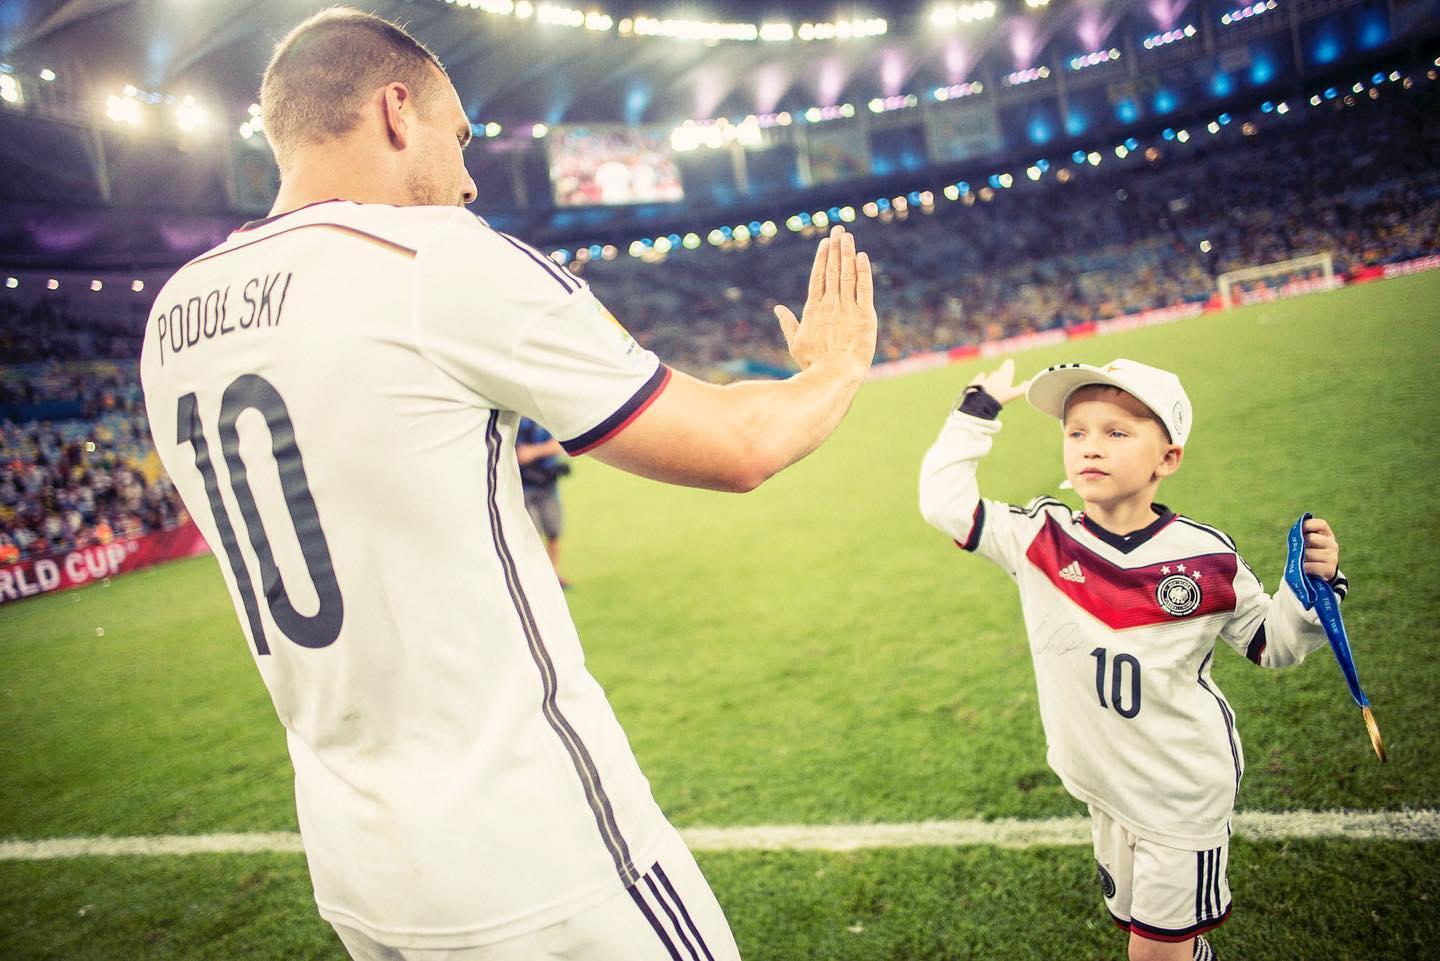 Lukas Podolski z synem